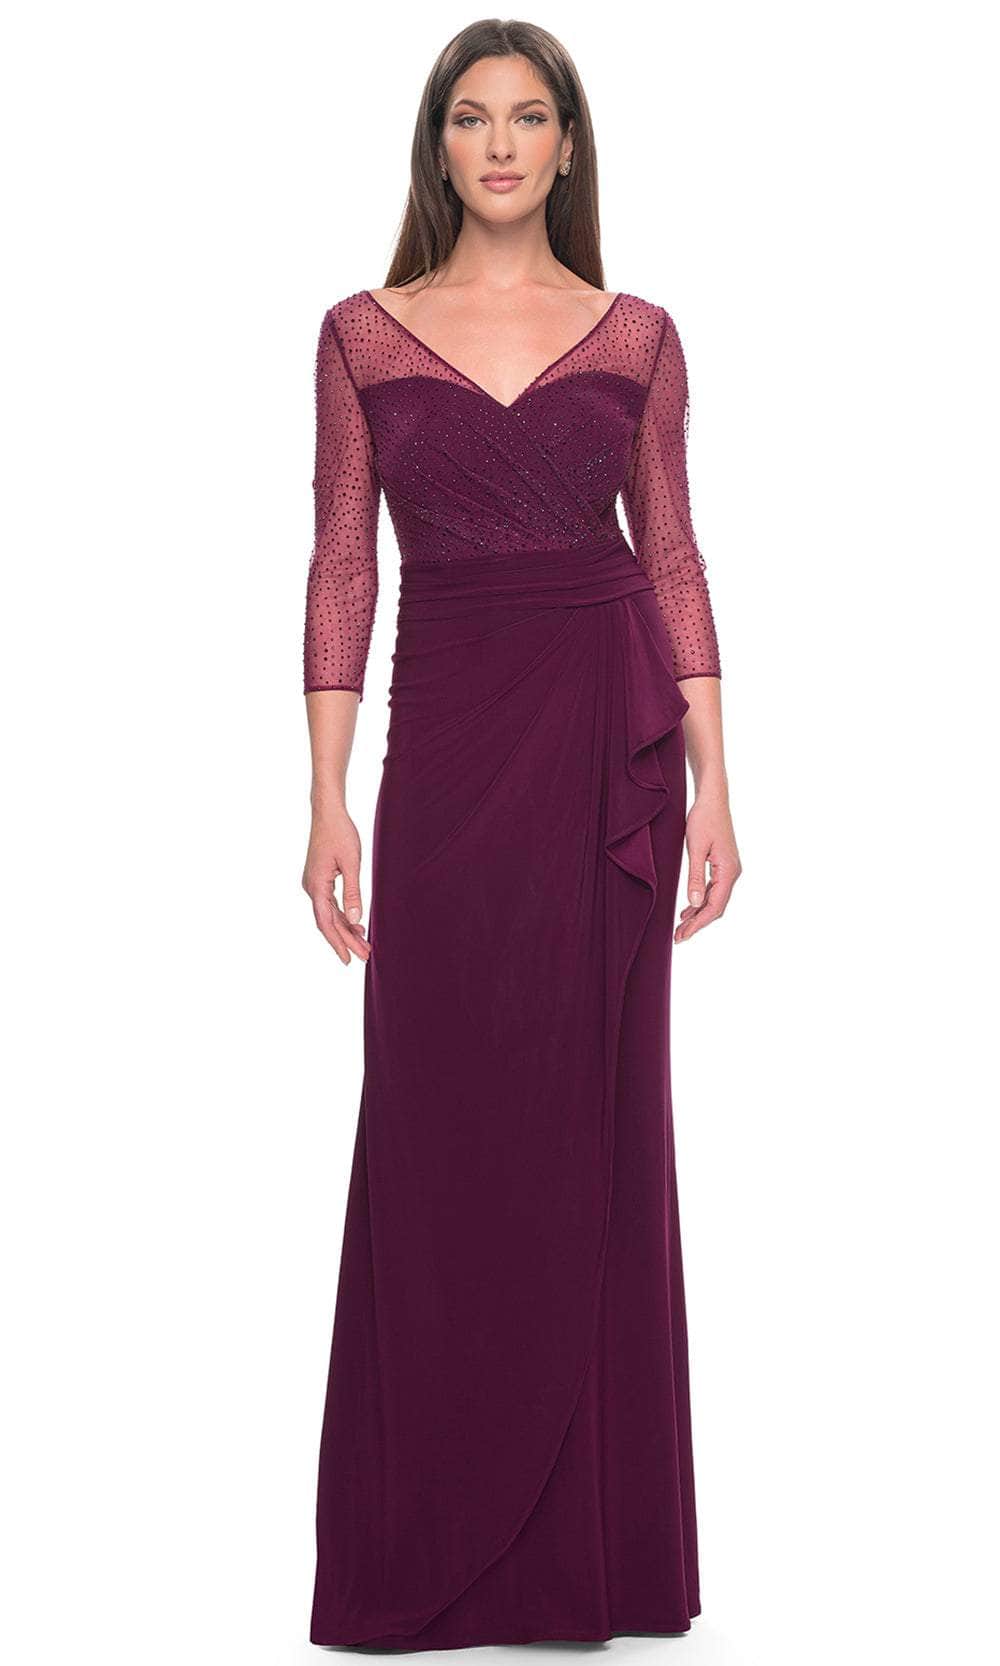 La Femme 31777 - Ruched Illusion Formal Dress Evening Dresses 4 / Dark Berry